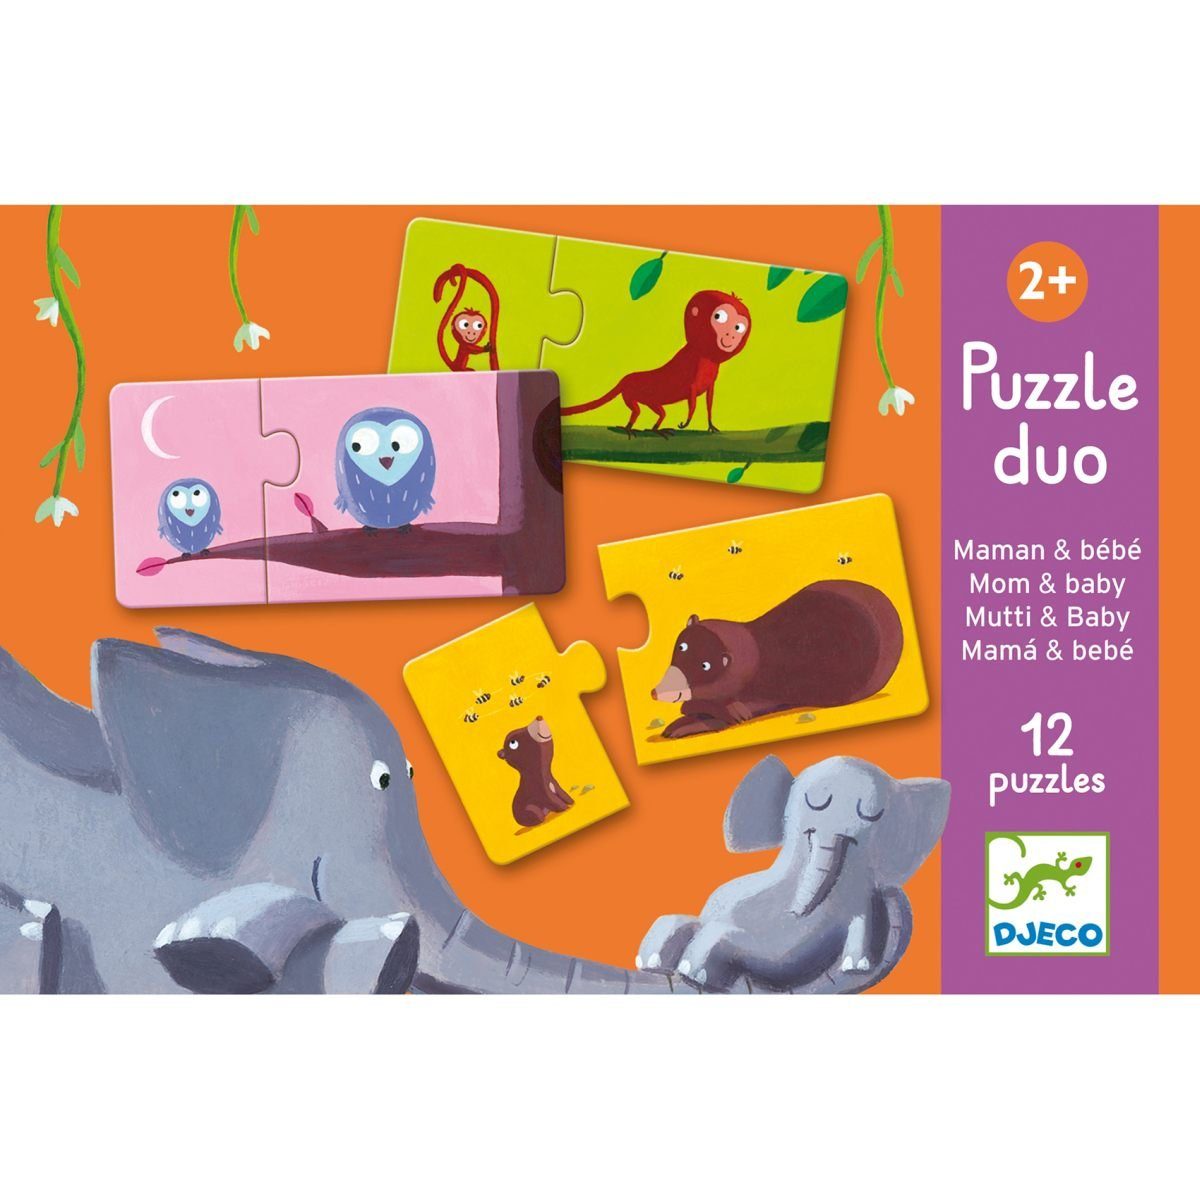 DJECO Puzzle Lernspiel - Puzzle duo: Mami & Kind, Puzzleteile